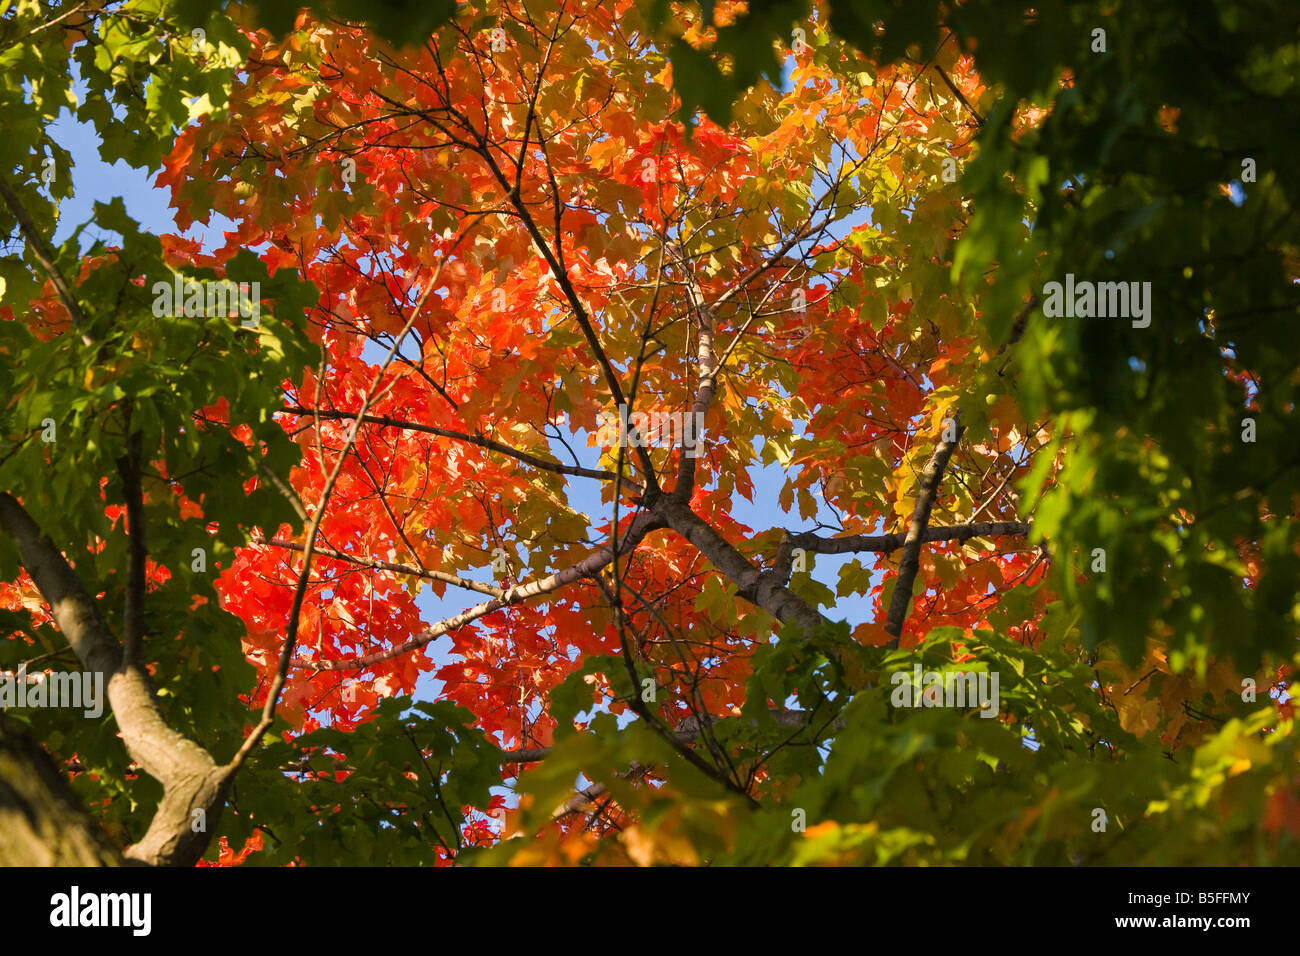 Herbst Blatt Farbwechsel in den oberen mittleren Westen der Vereinigten Staaten Stockfoto